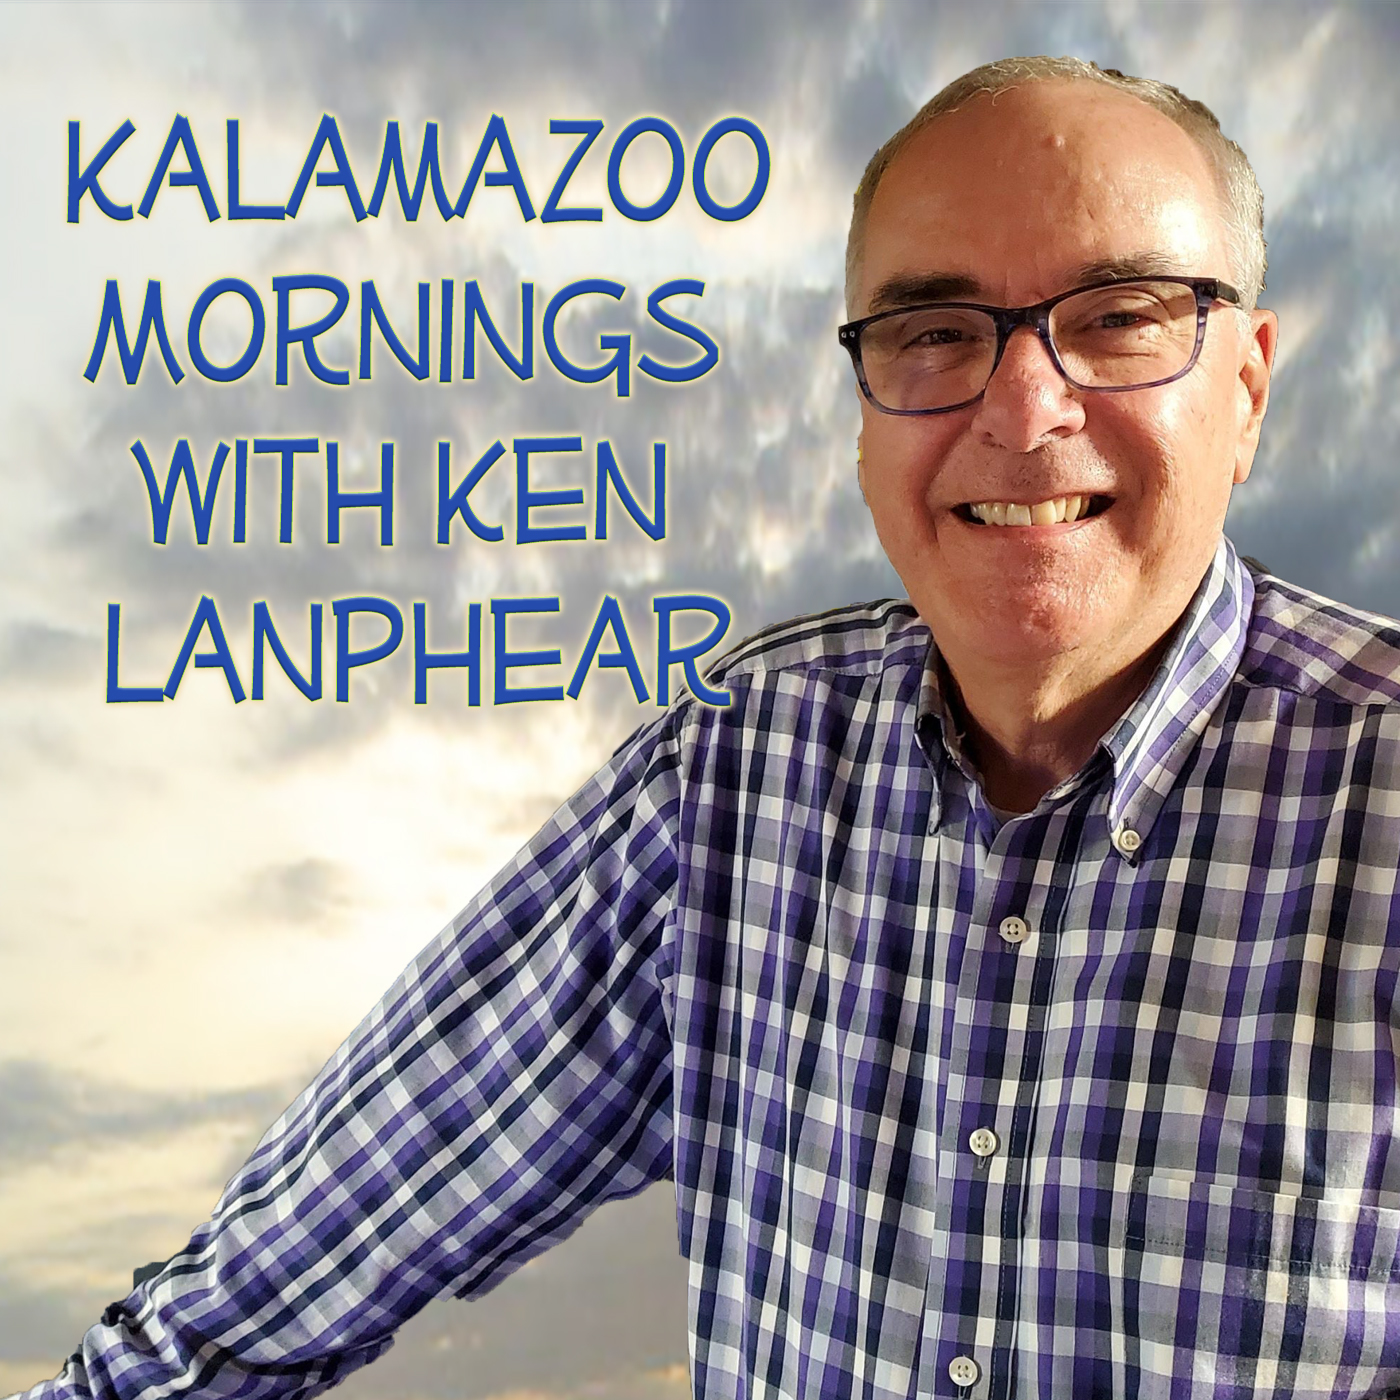 This week's Kalamazoo Arts report